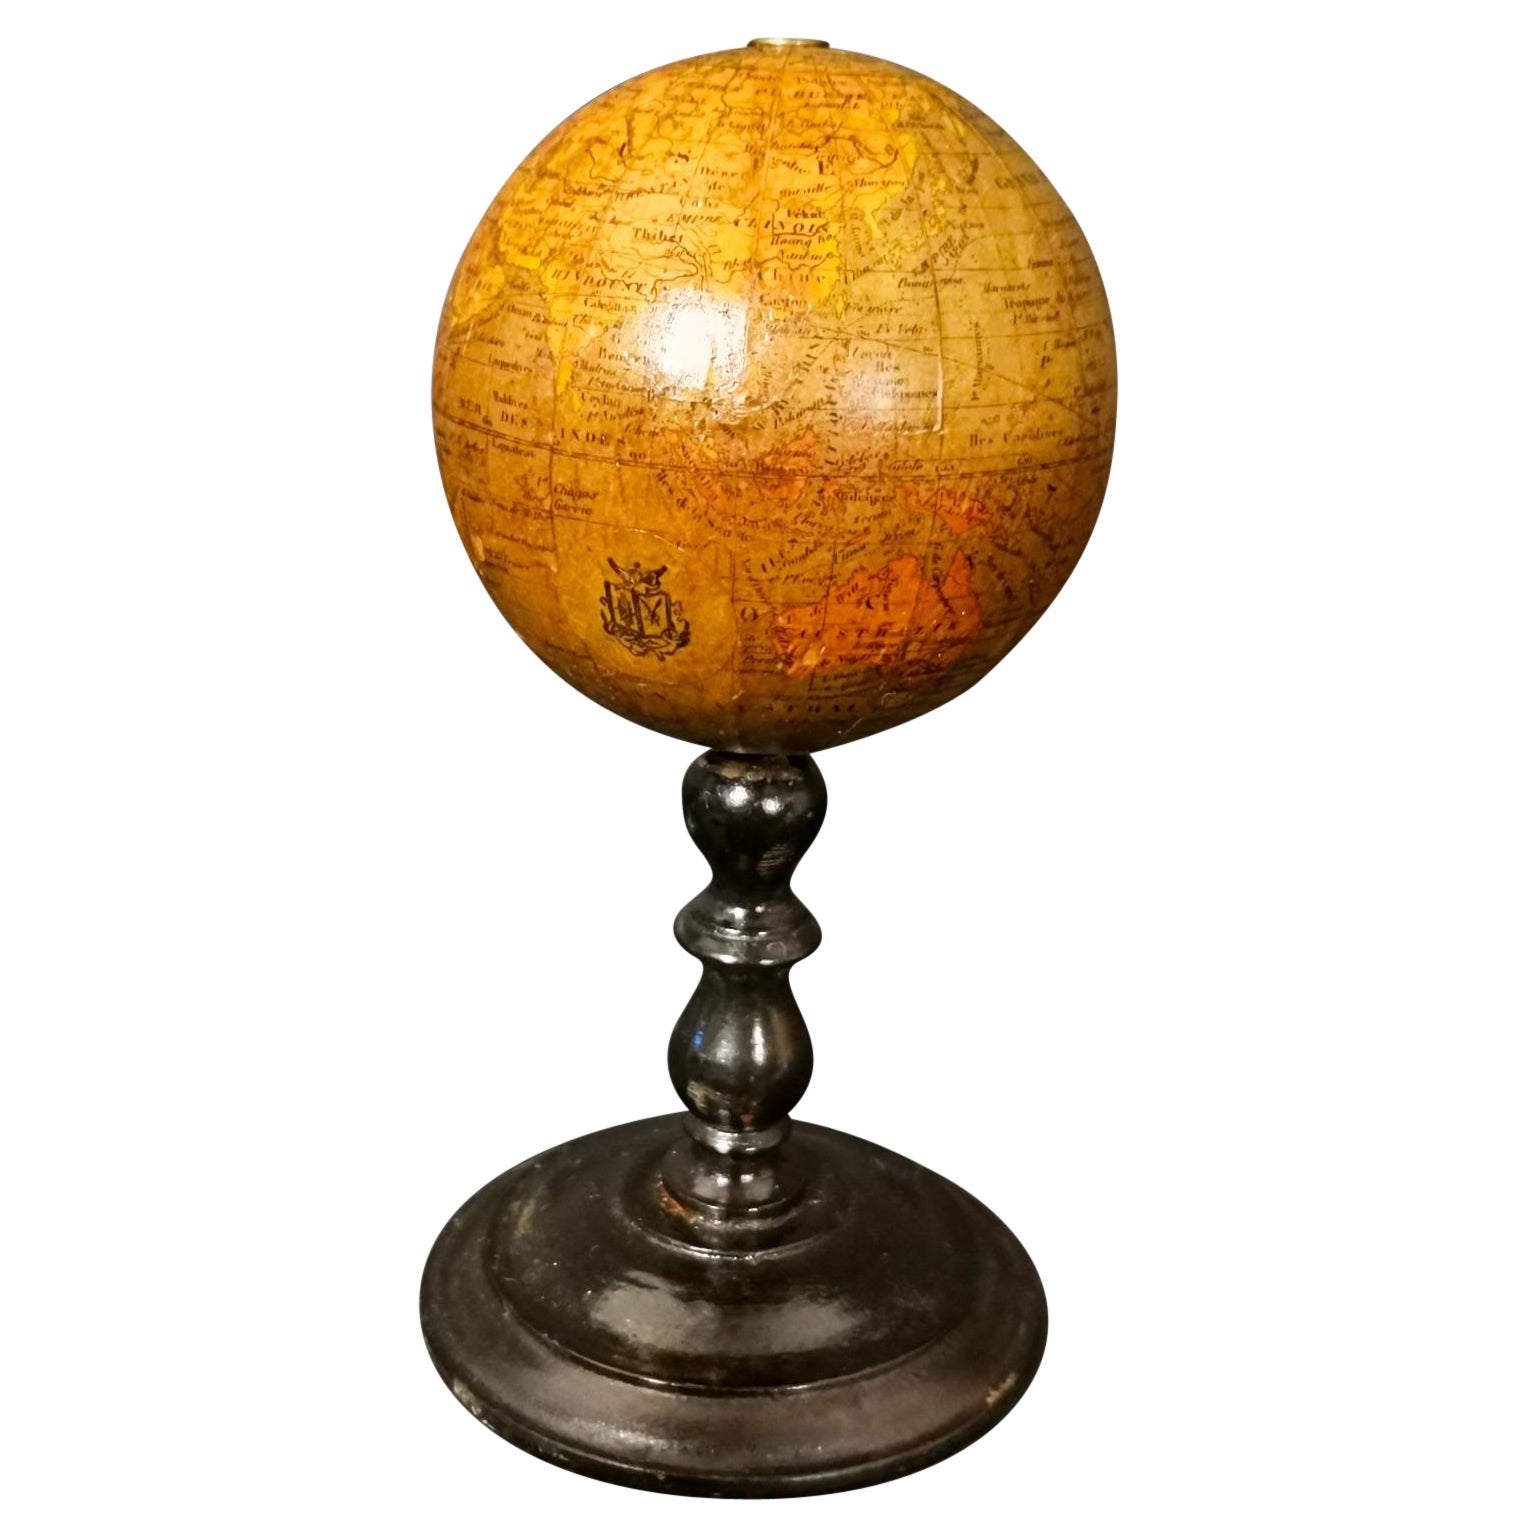 Petit globe du XIXe siècle en vente